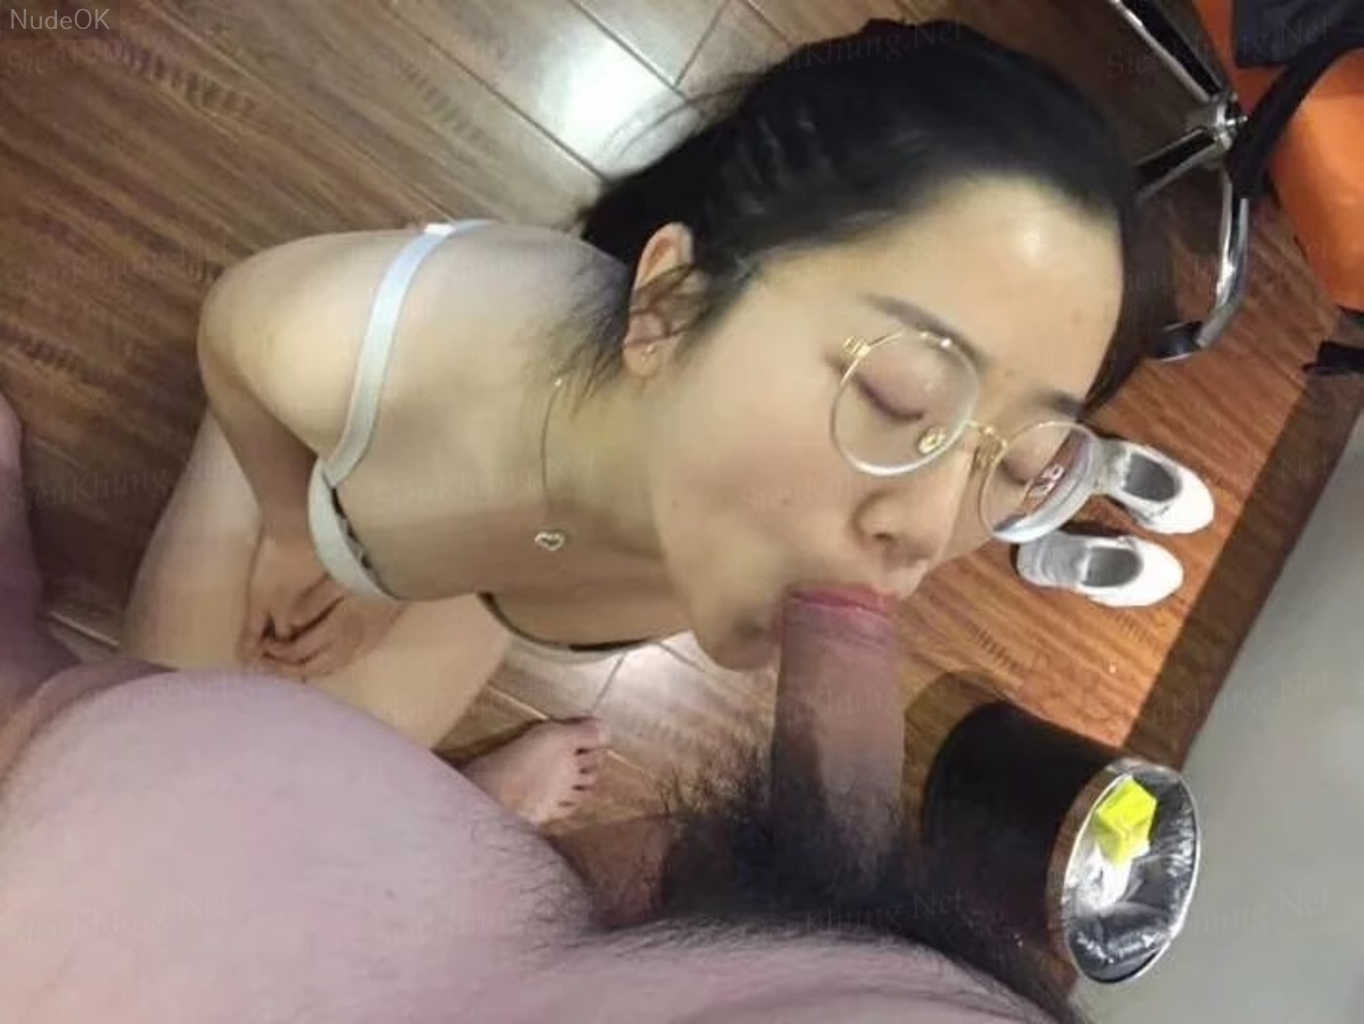 NudeOK asia sex nude couple self picture masturbation photos oral sex fucking cunt boob;  